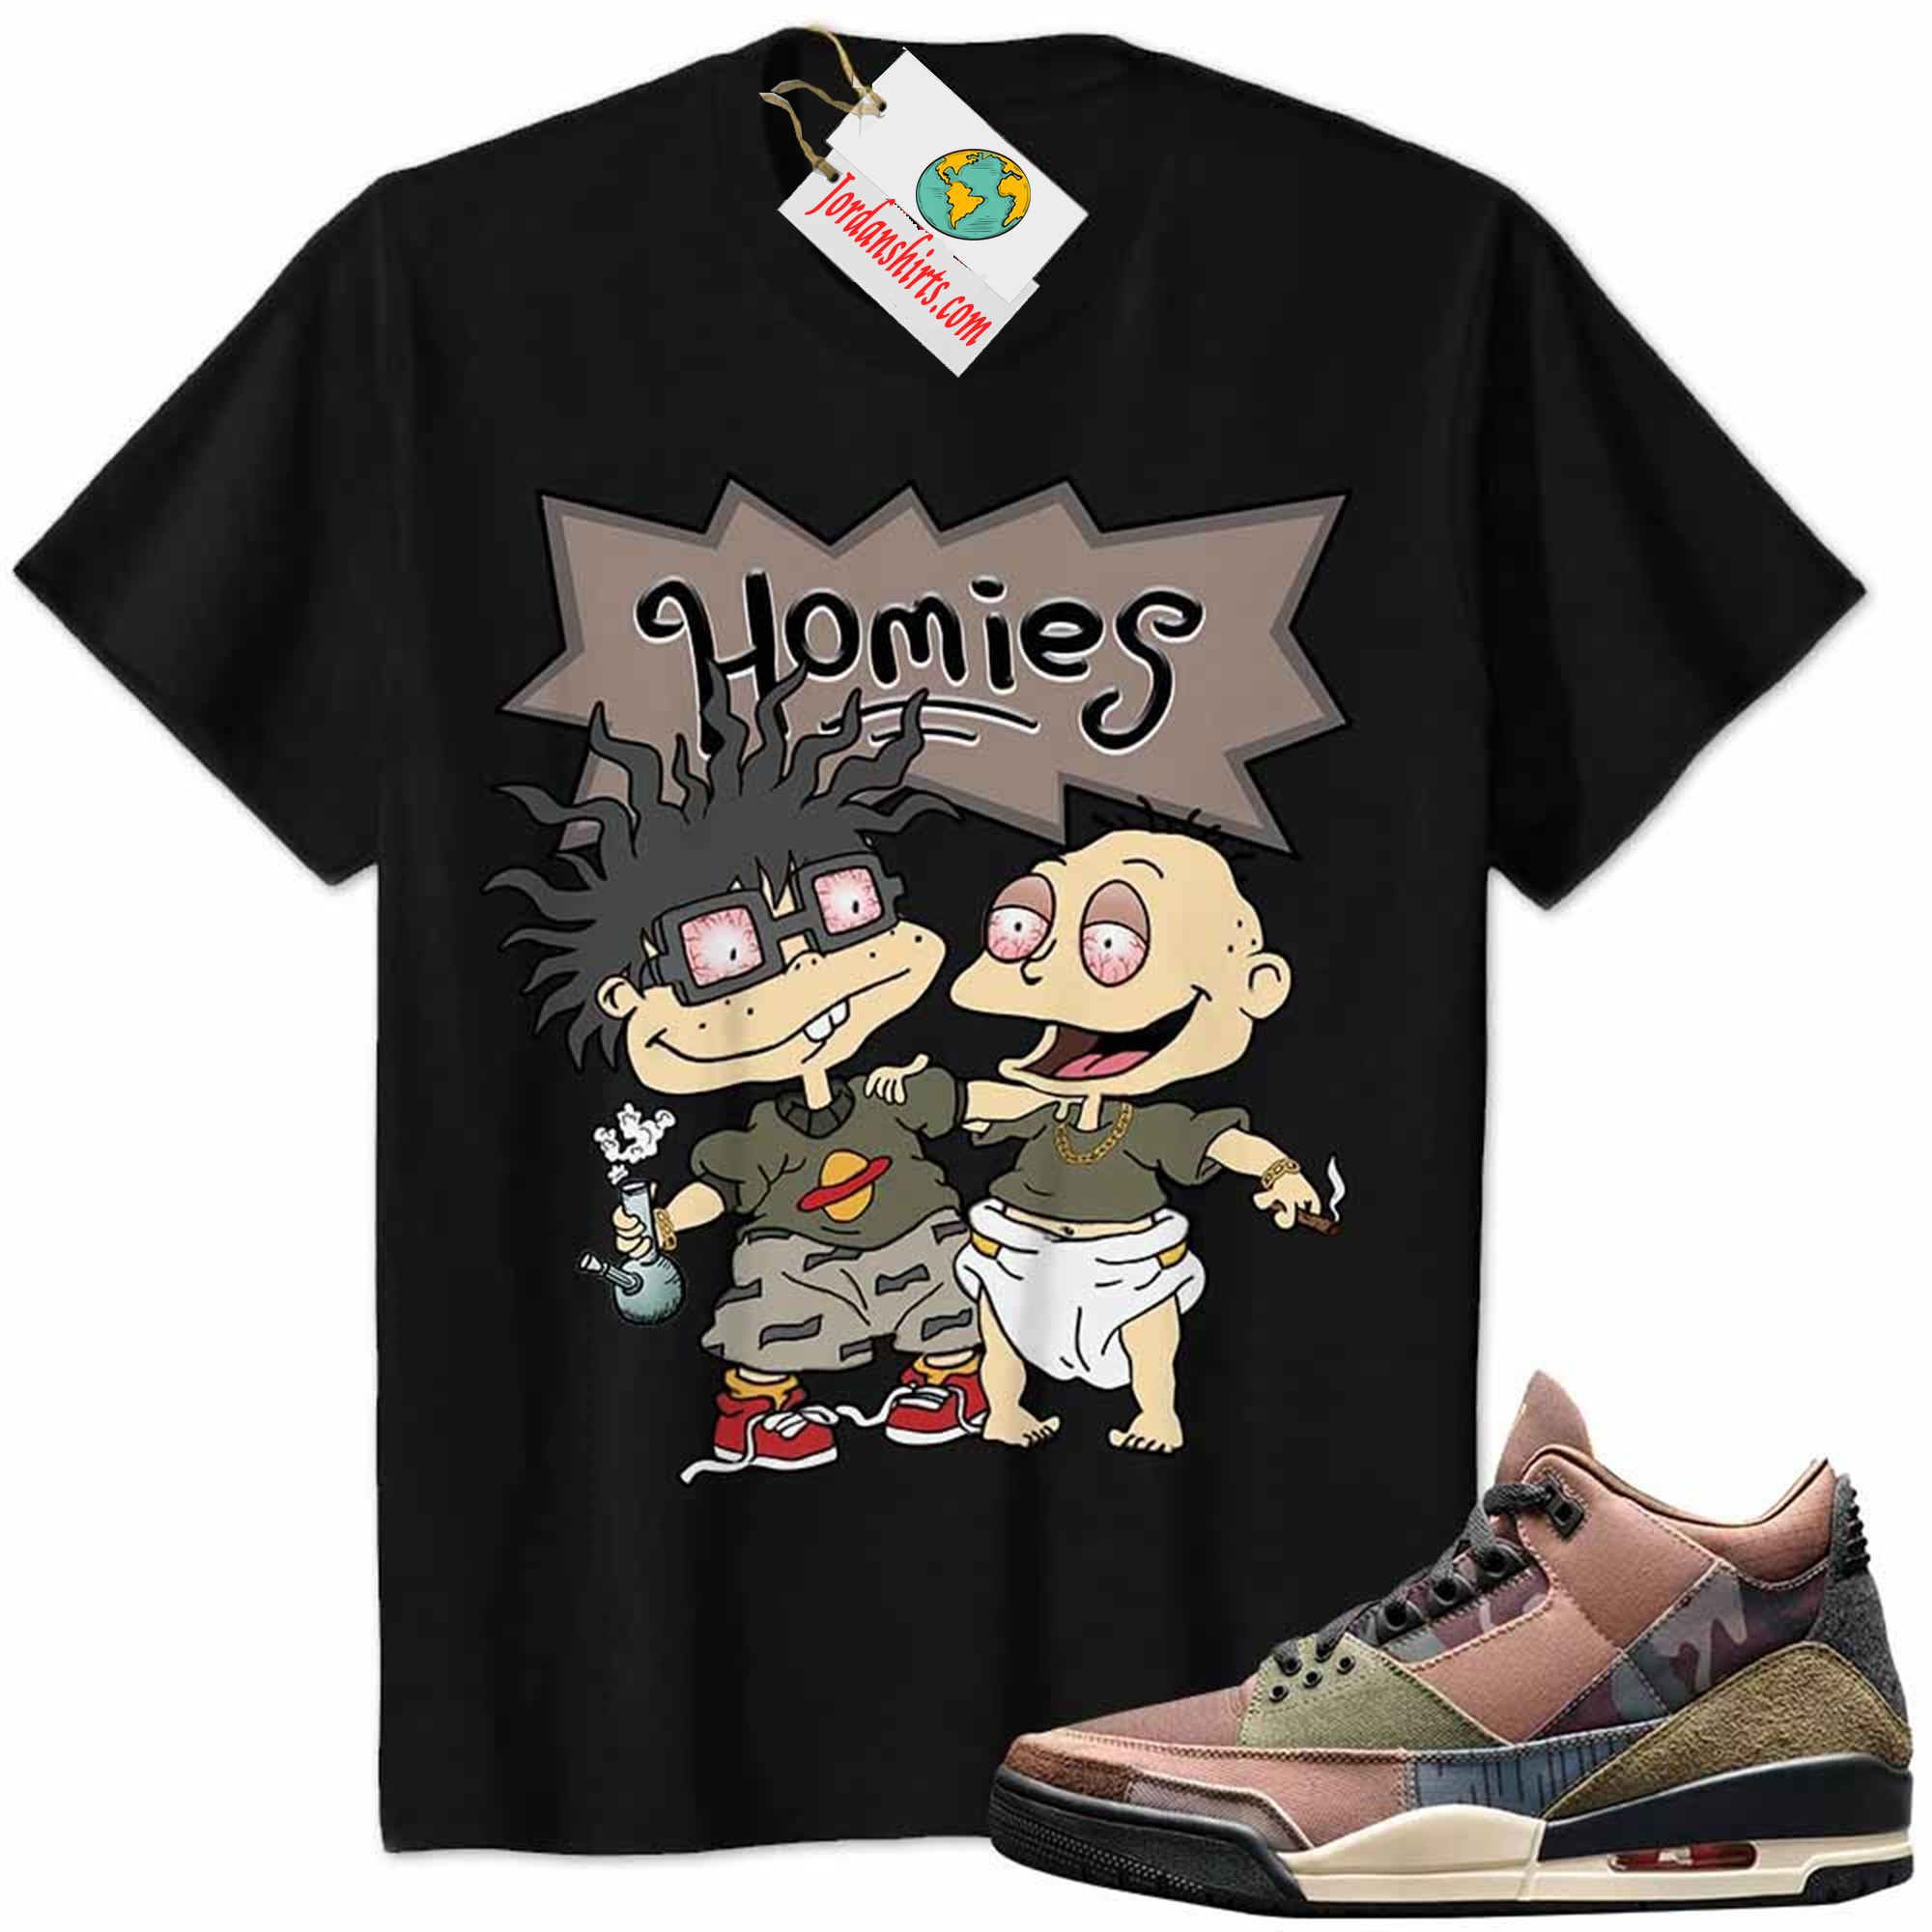 Jordan 3 Shirt, Jordan 3 Patchwork Shirt Hommies Tommy Pickles Chuckie Finster Rugrats Black Full Size Up To 5xl